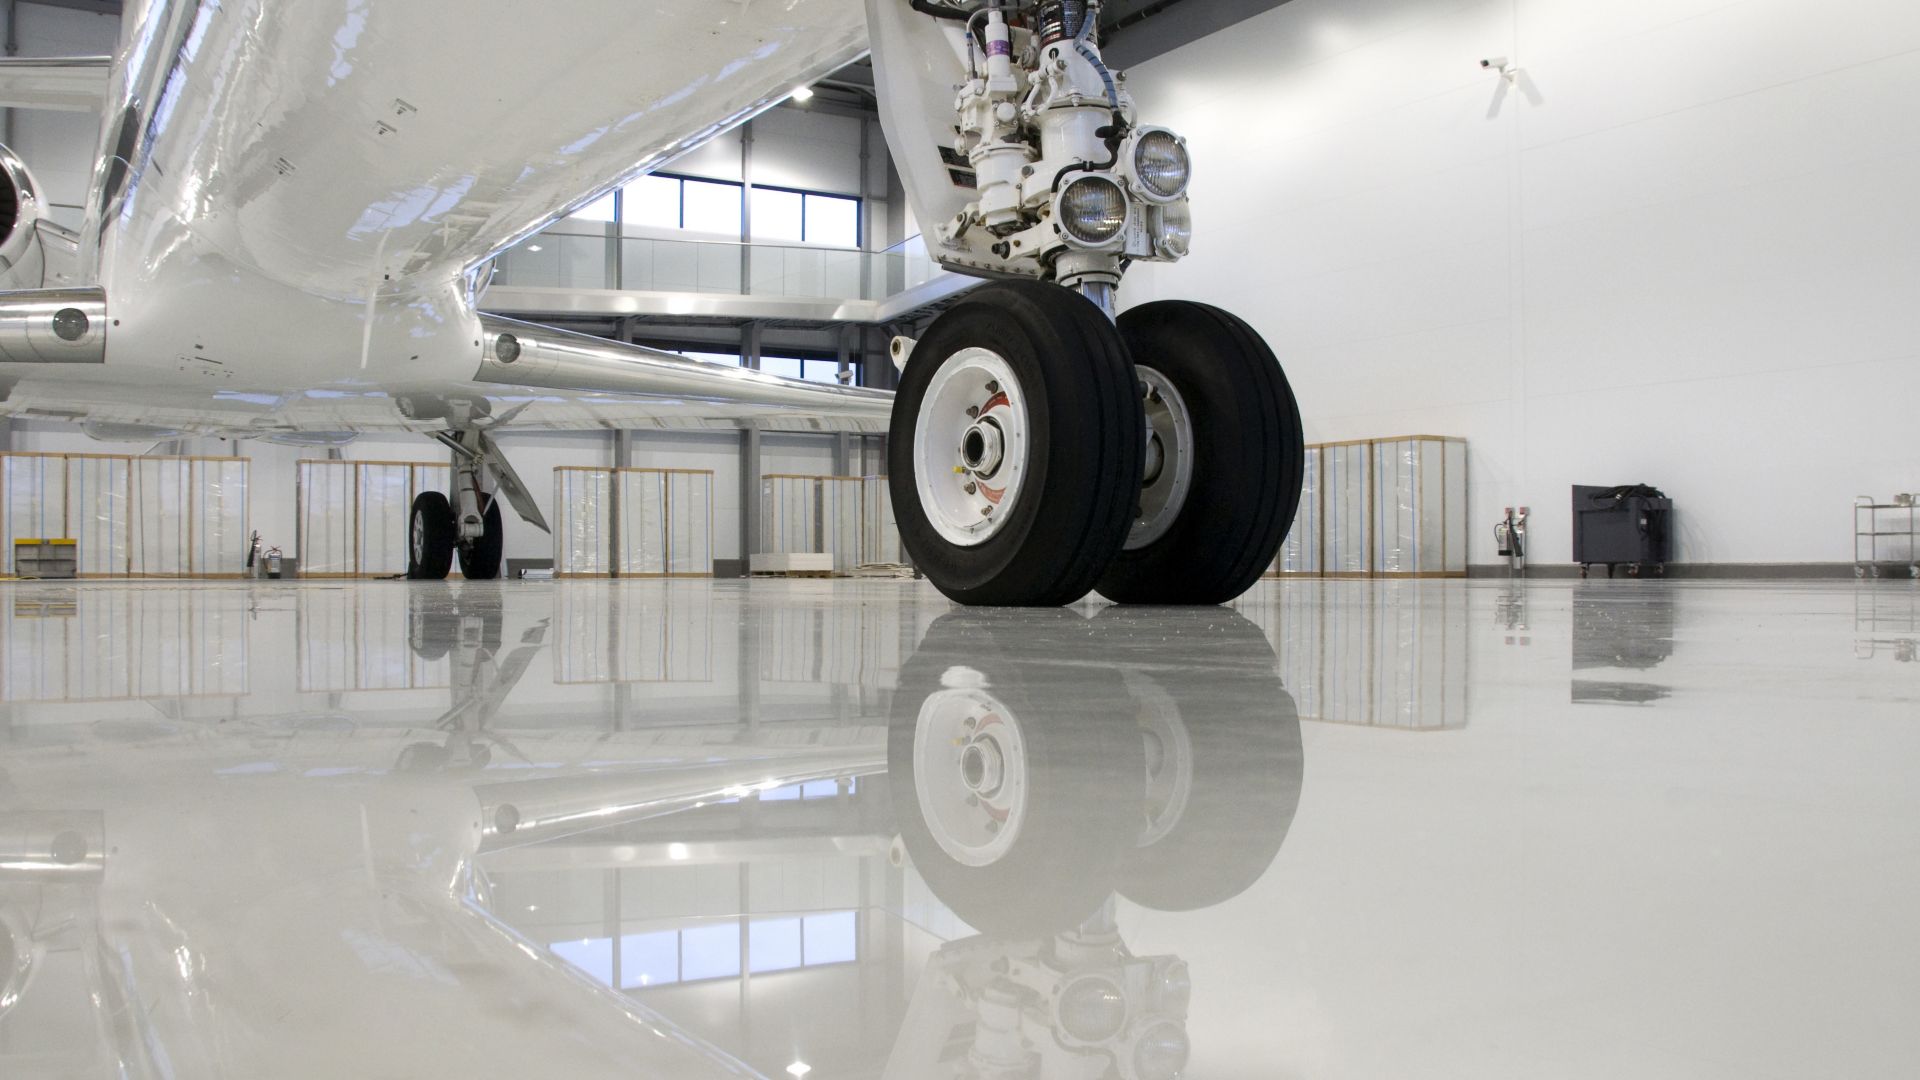 Plane wheel on industrial floor coating with Sikafloor high performance flooring system in aircraft hangar